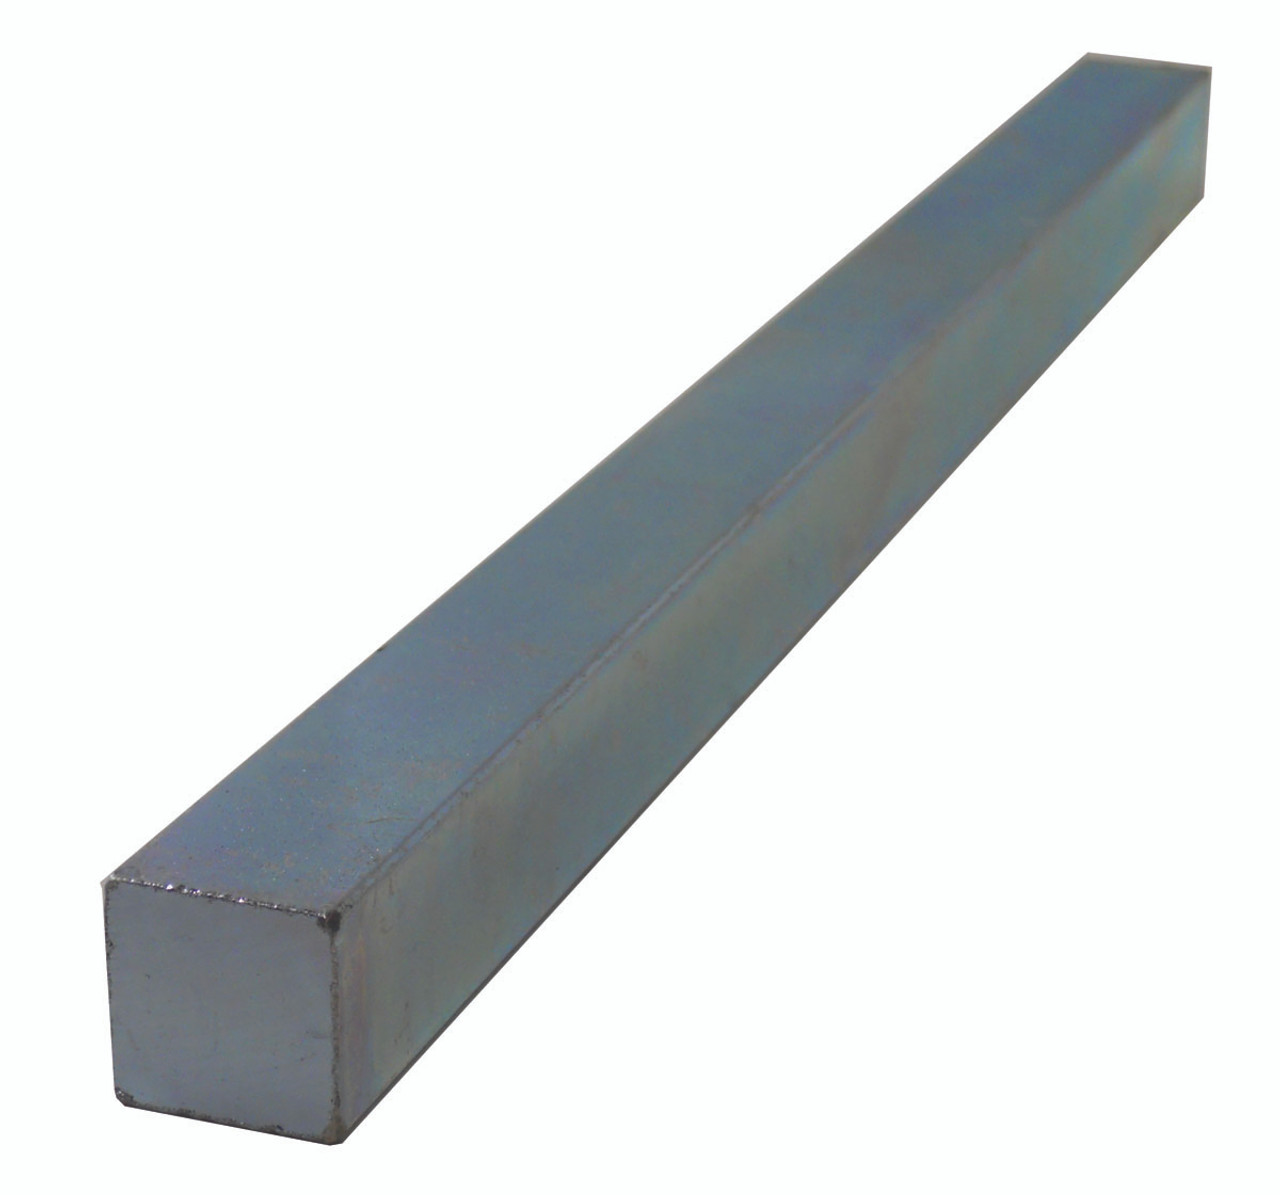 Square SAE 1/4 x 36" Zinc Plated Steel Keystock  .250-36